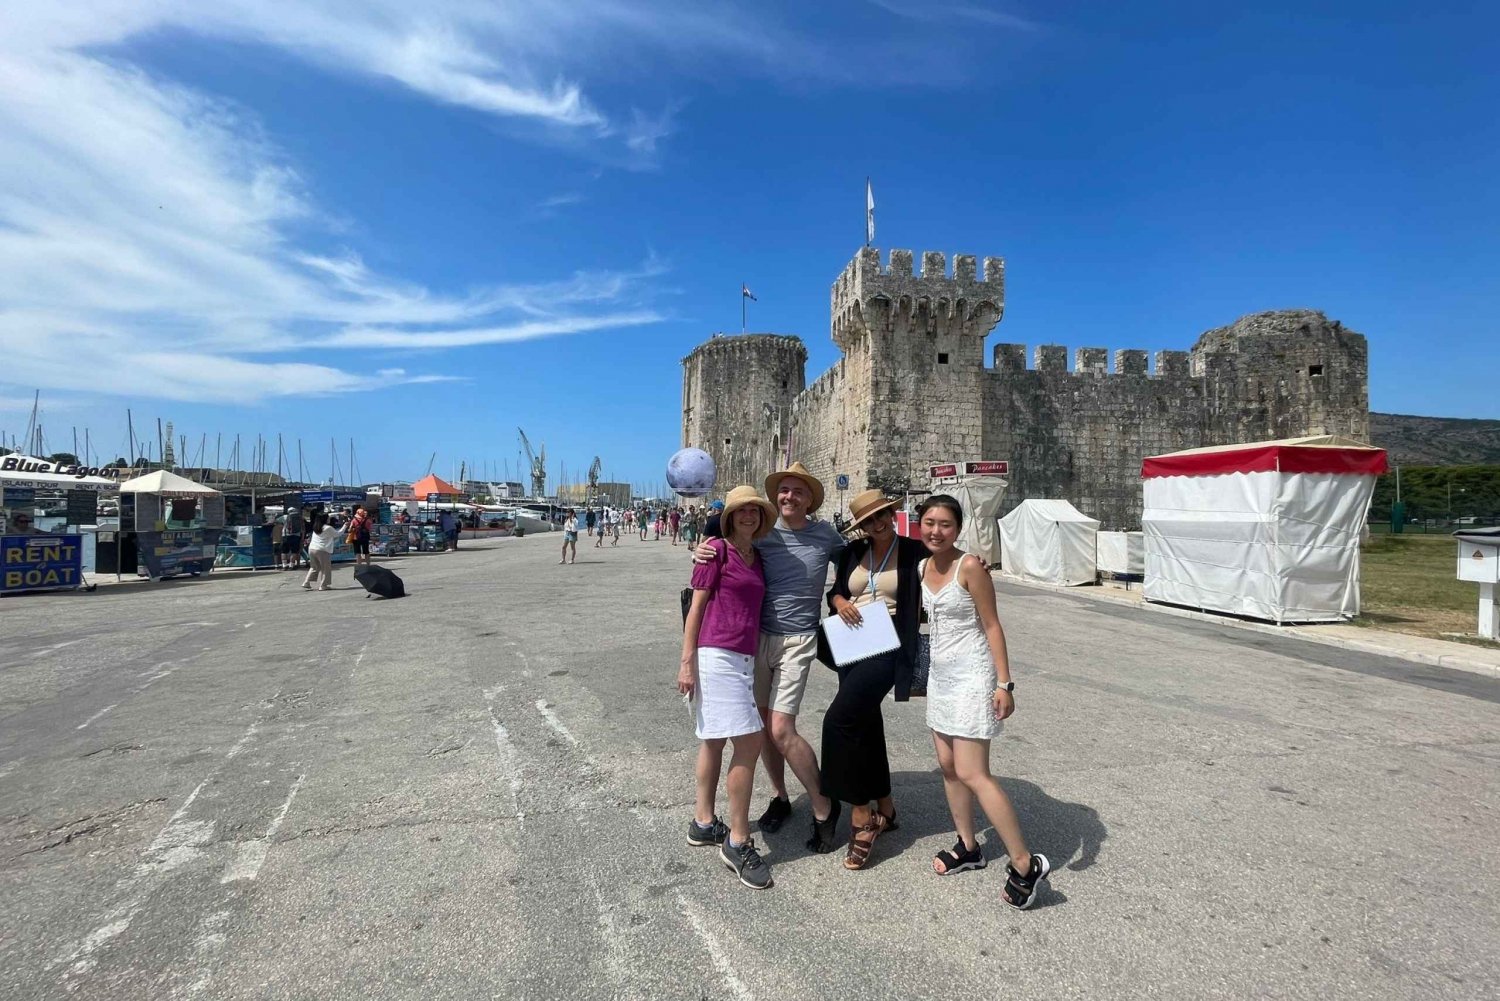 Trogir: Stads hoogtepunten rondleiding met gids